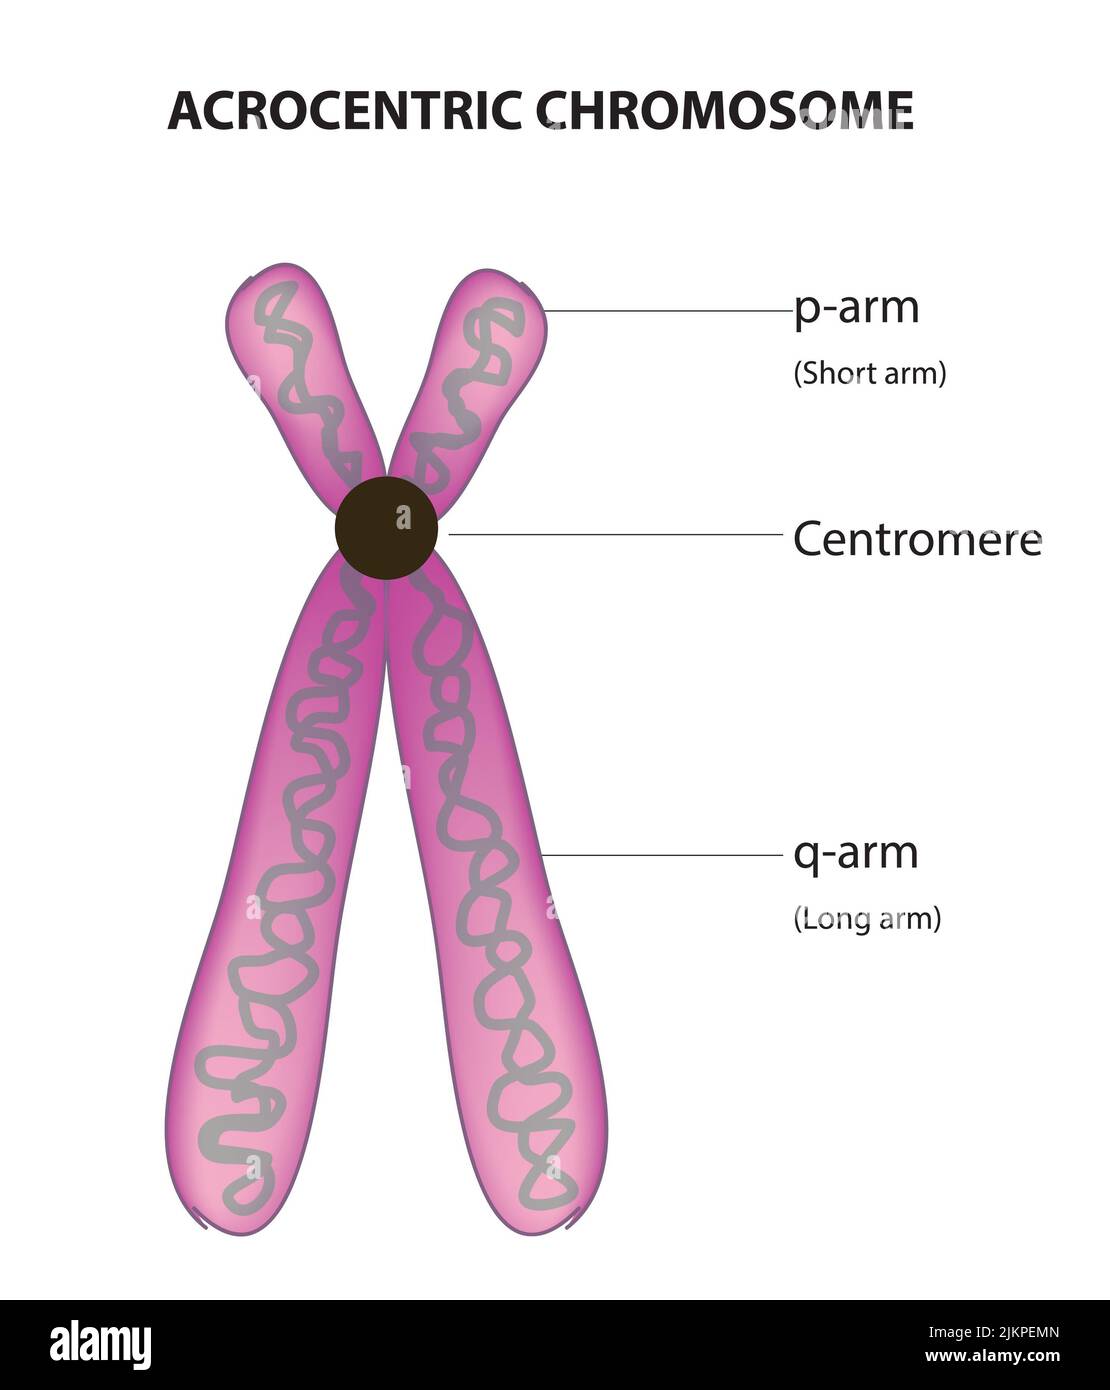 Cromosoma acrocéntrico Foto de stock